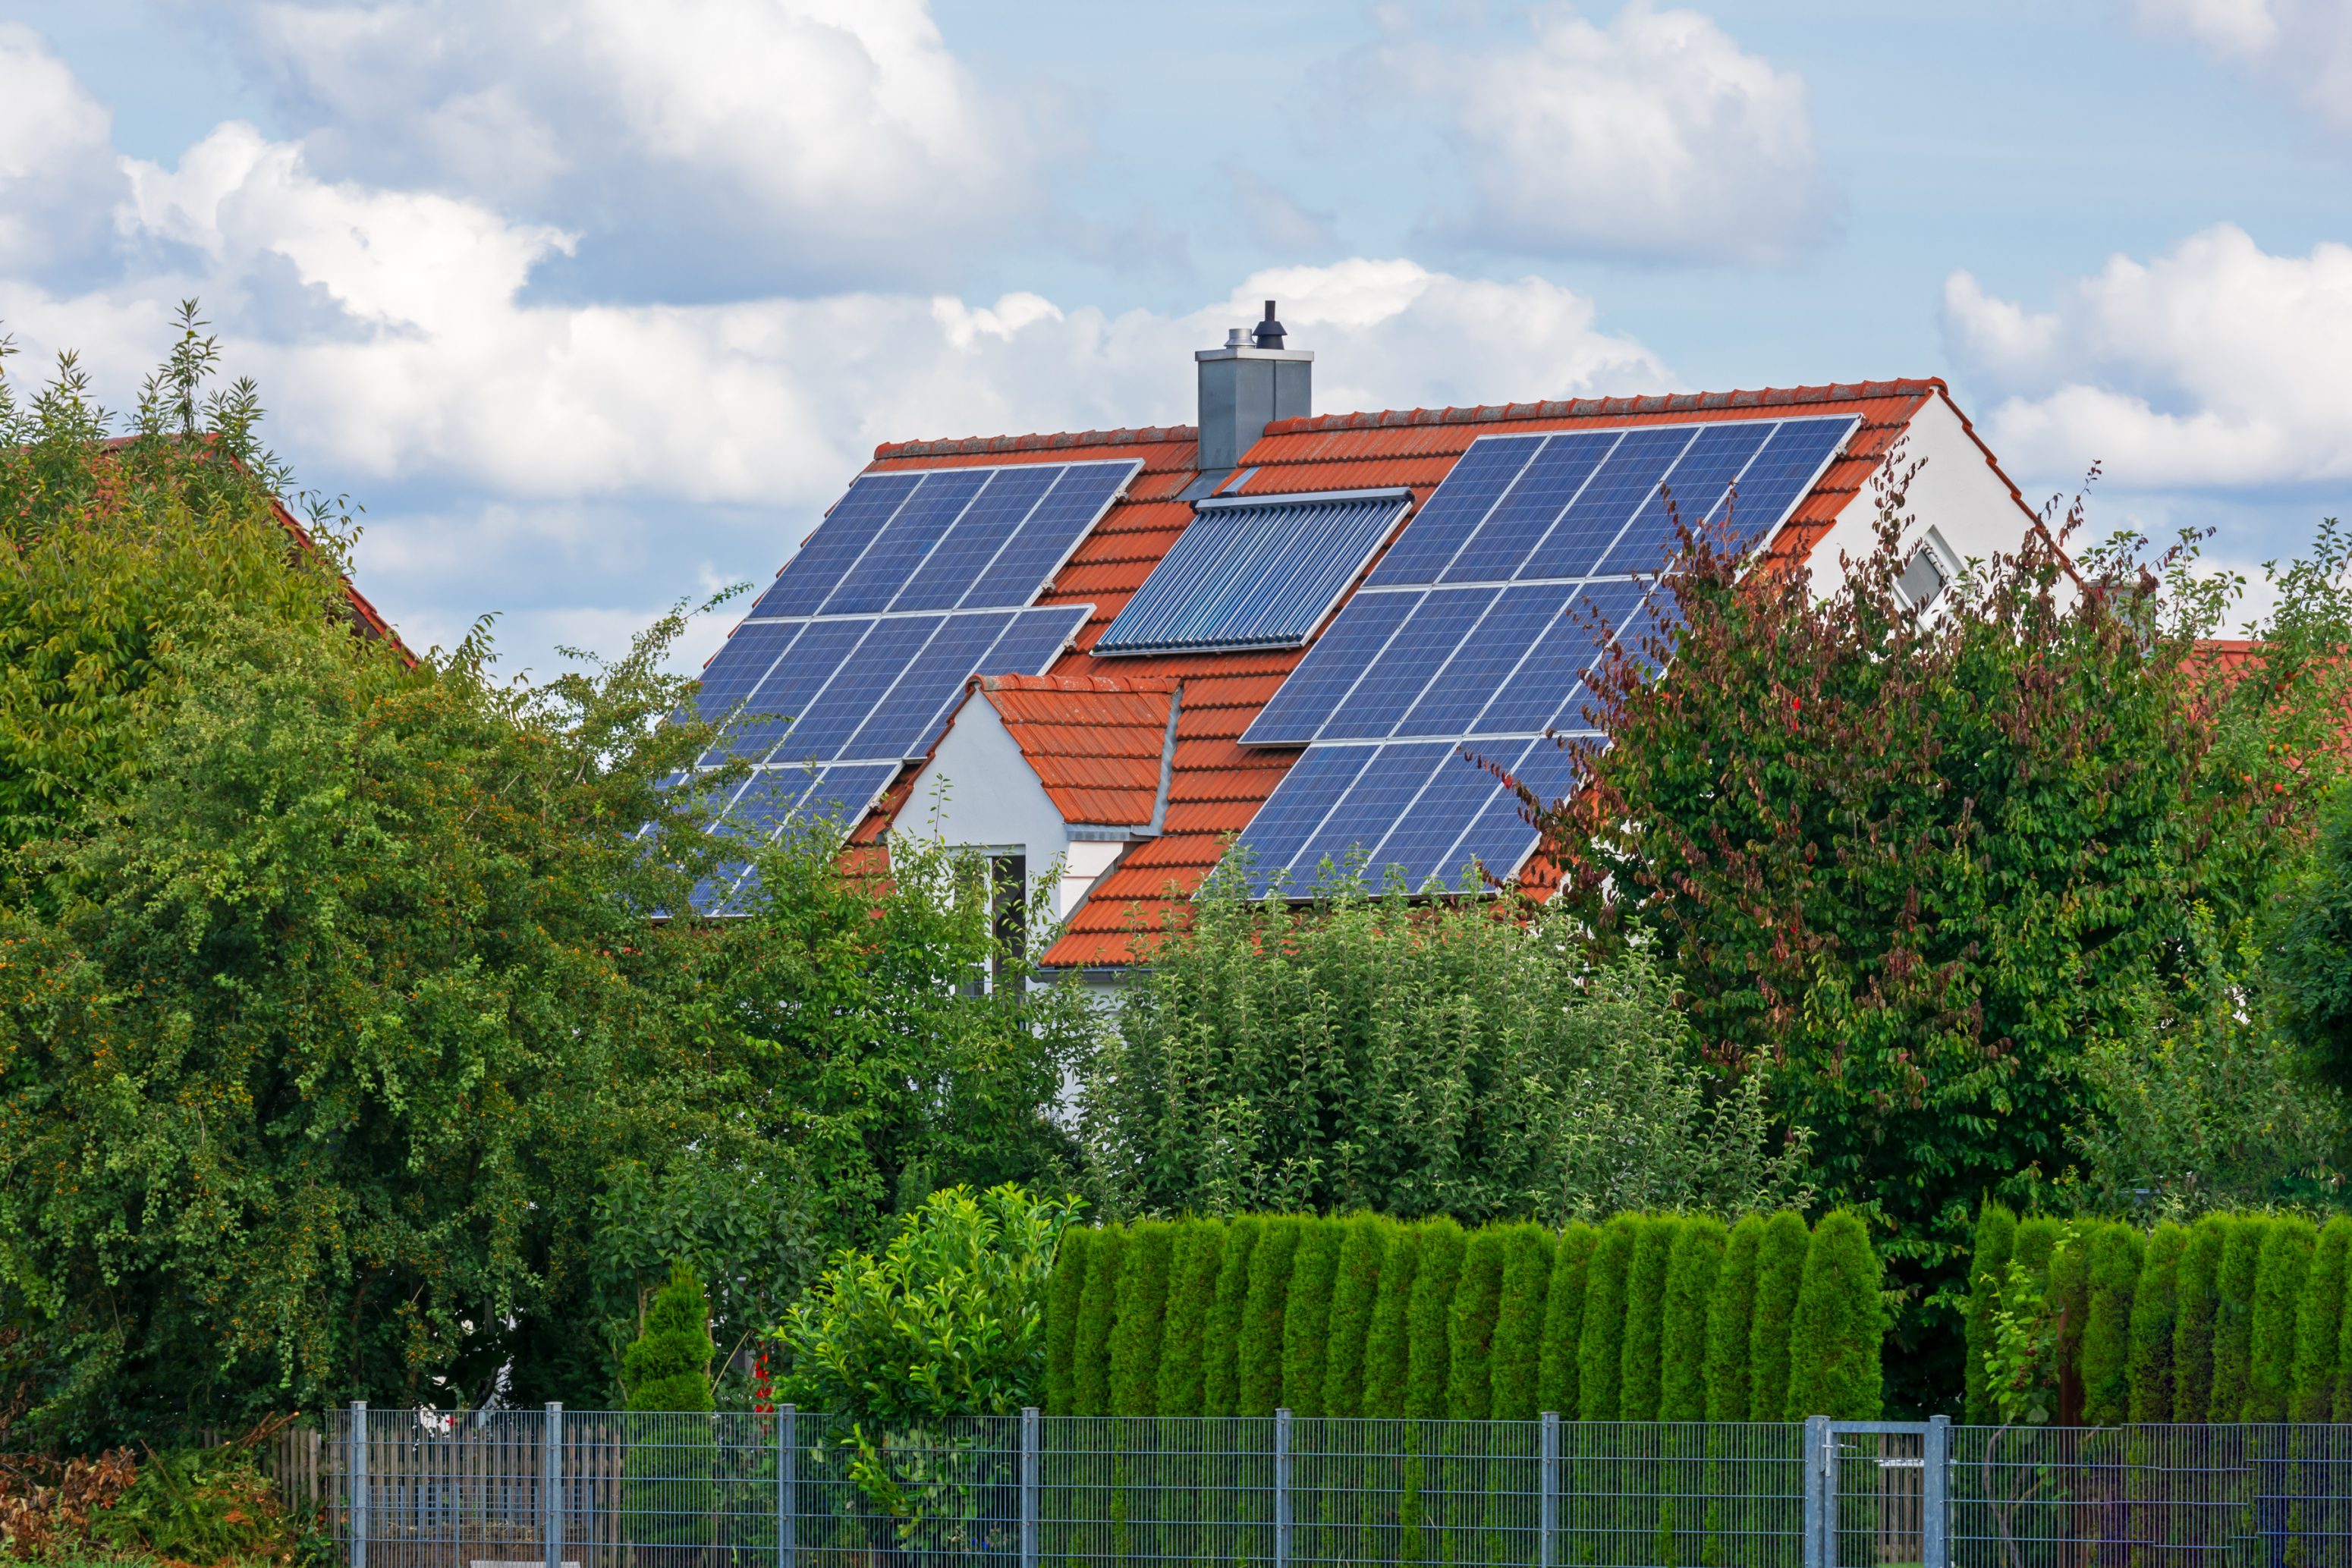 Casa com sistema de coleta de solar - Blog Famatel